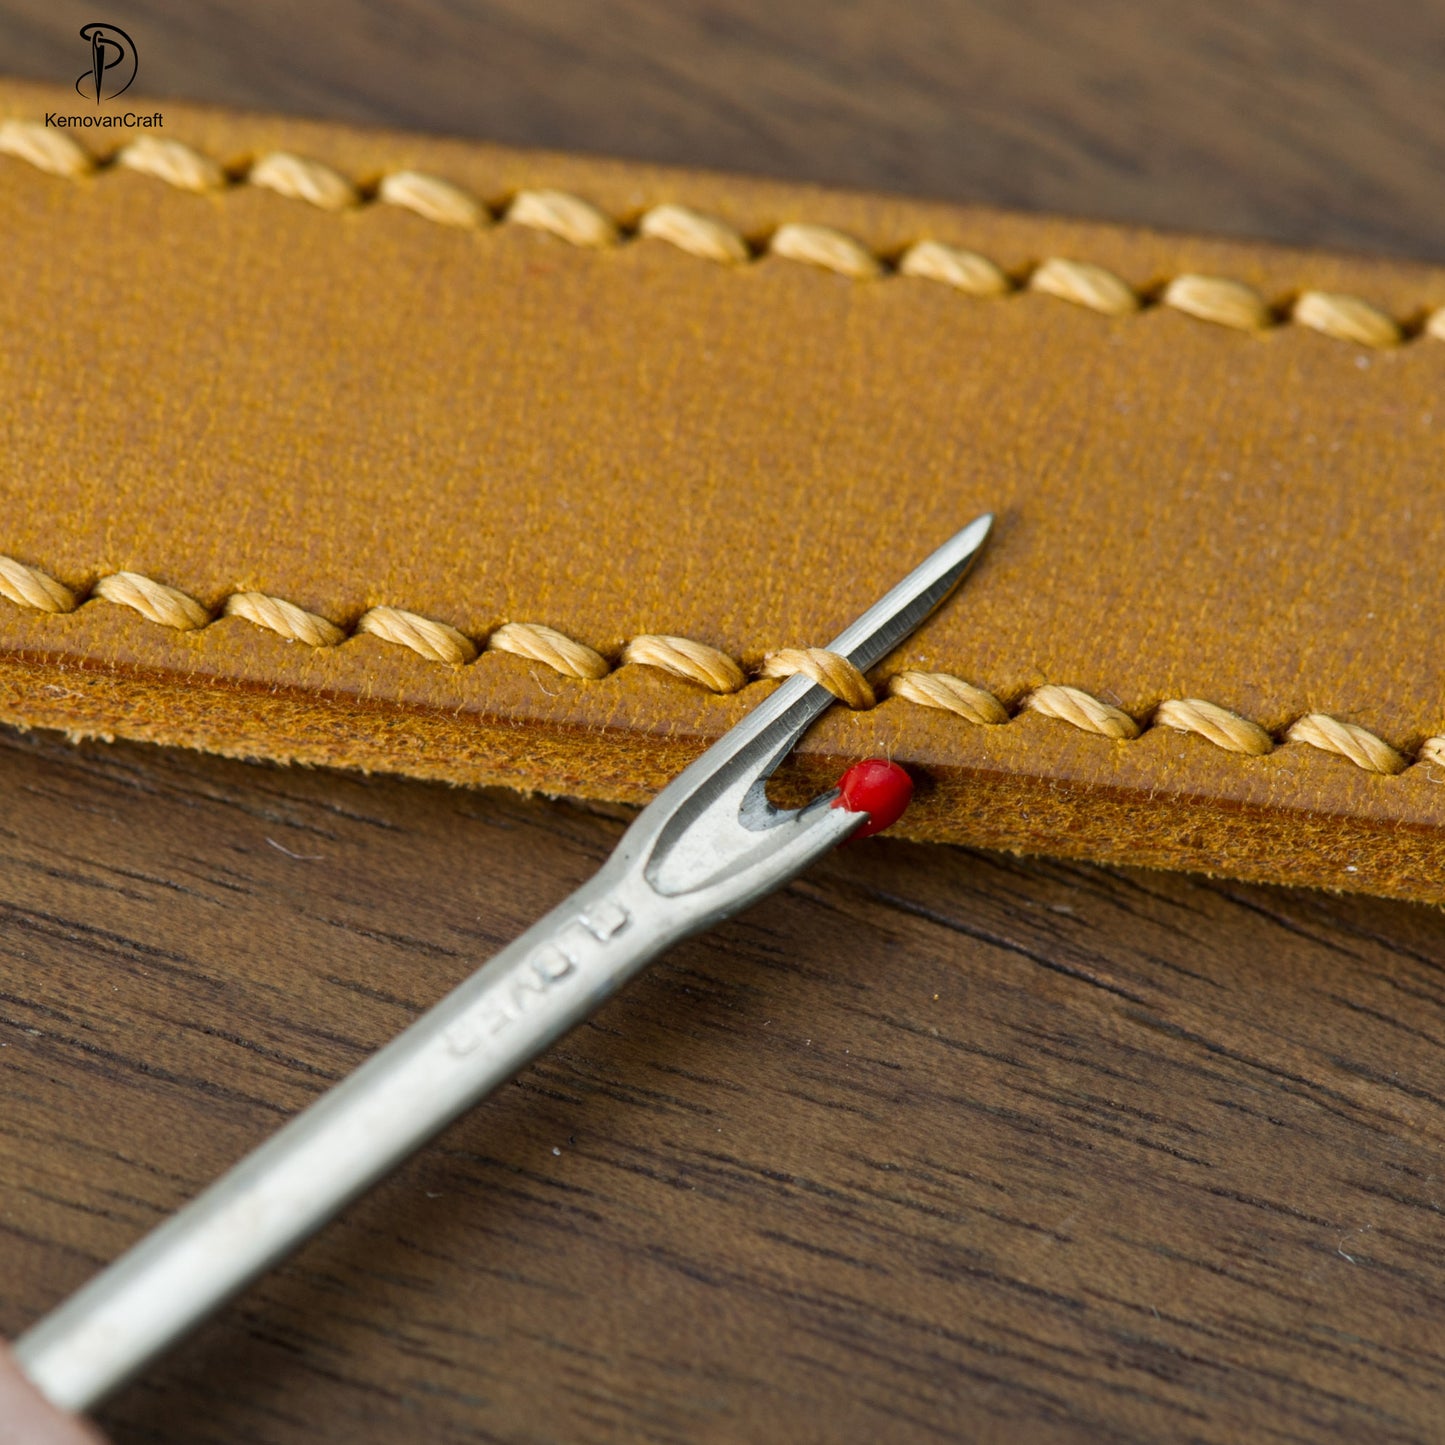 Leather Craft Seam Ripper Remove Stitching – KemovanCraft